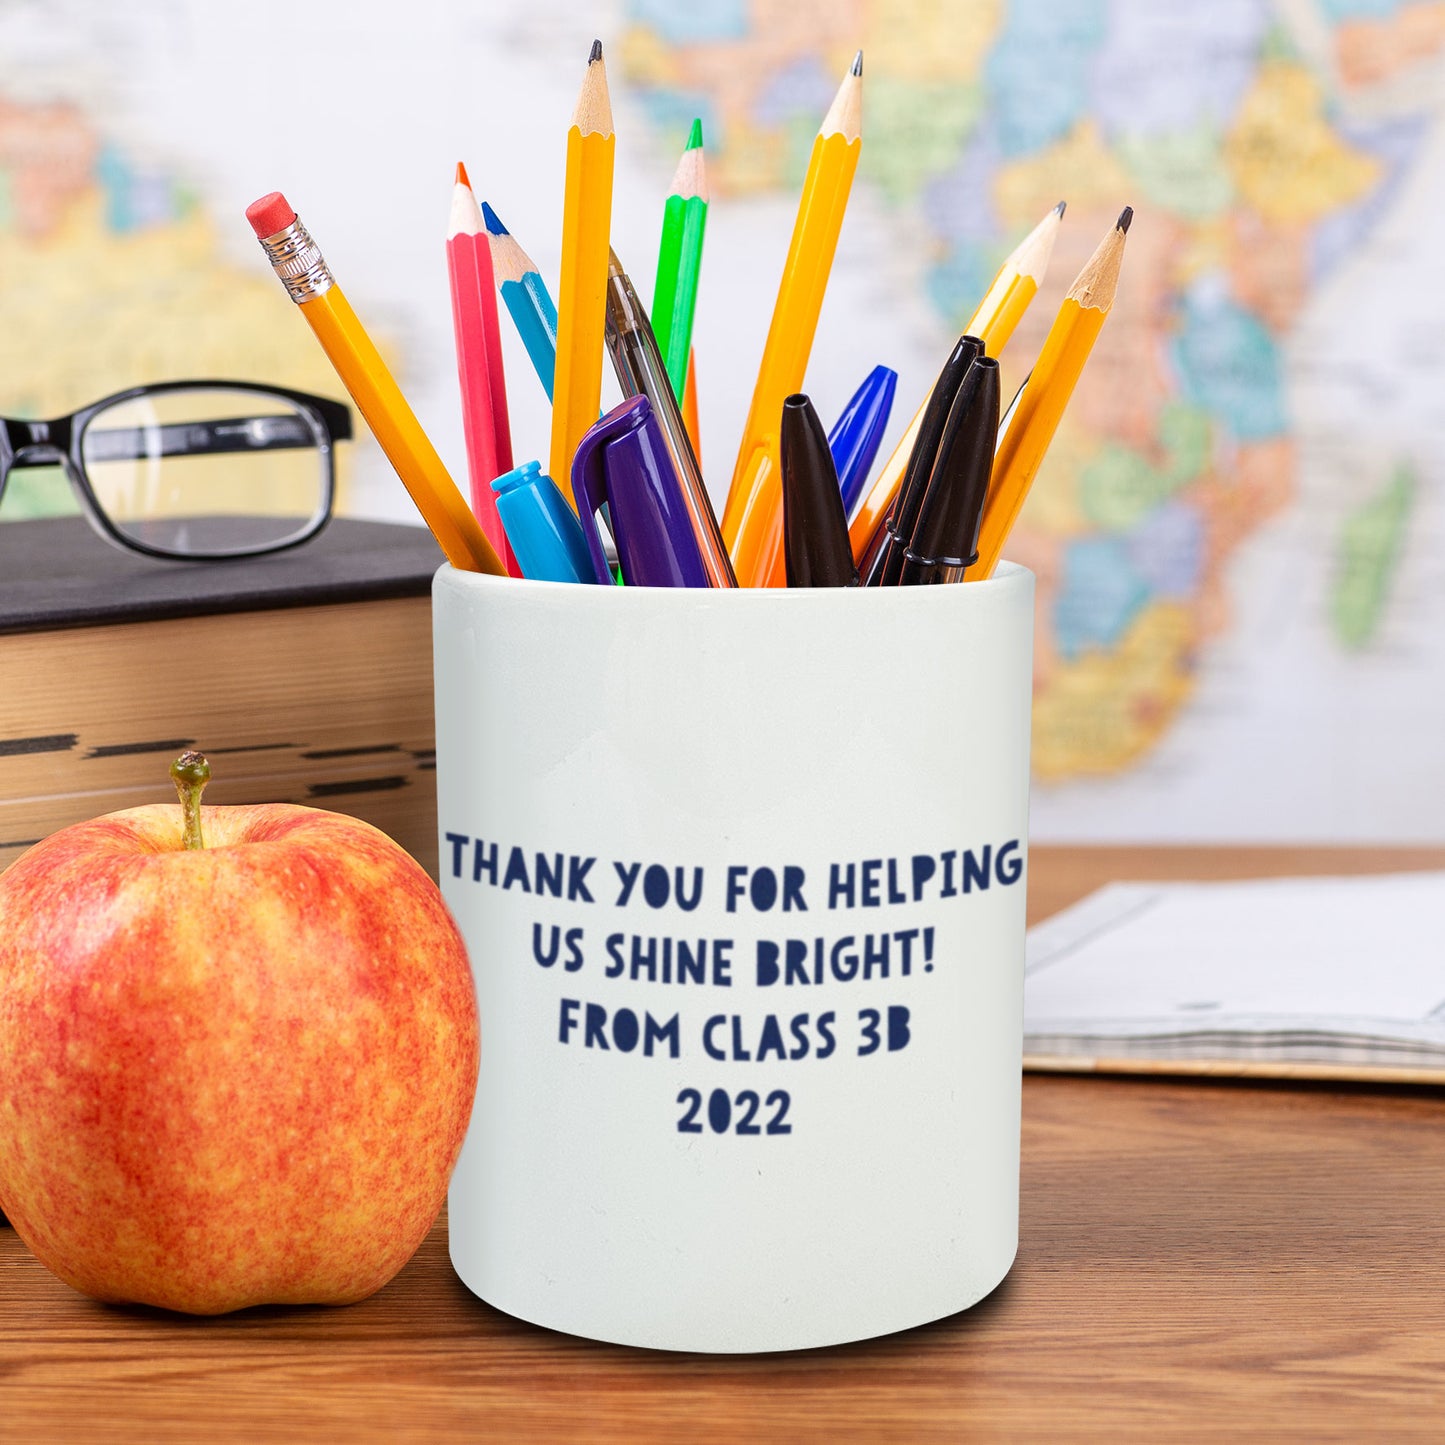 Bee’s Knees Teacher Personalised Pencil Pot | Thank you teacher gift | Teacher Desk Organiser Gift | Personalised Teacher Gift